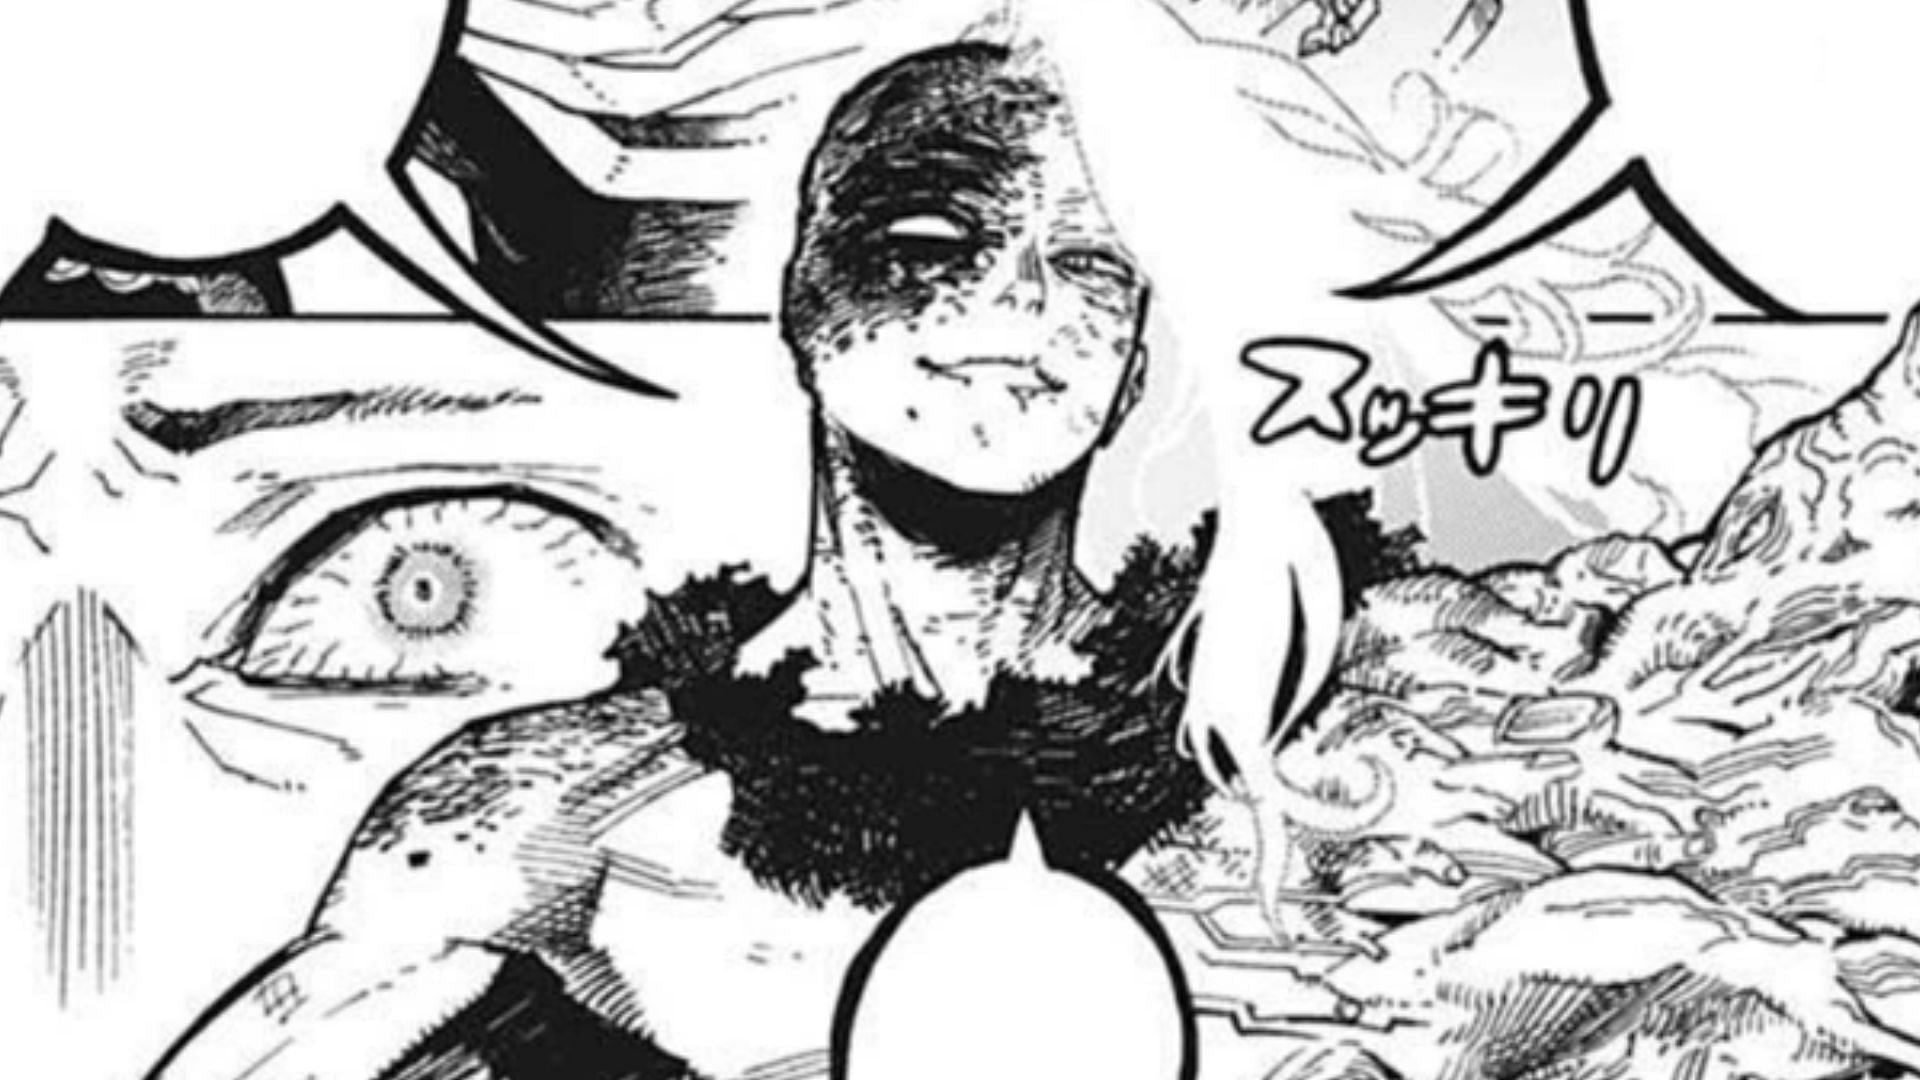 His design changes quite a bit as the series progresses (Image via Weekly Shōnen Jump)